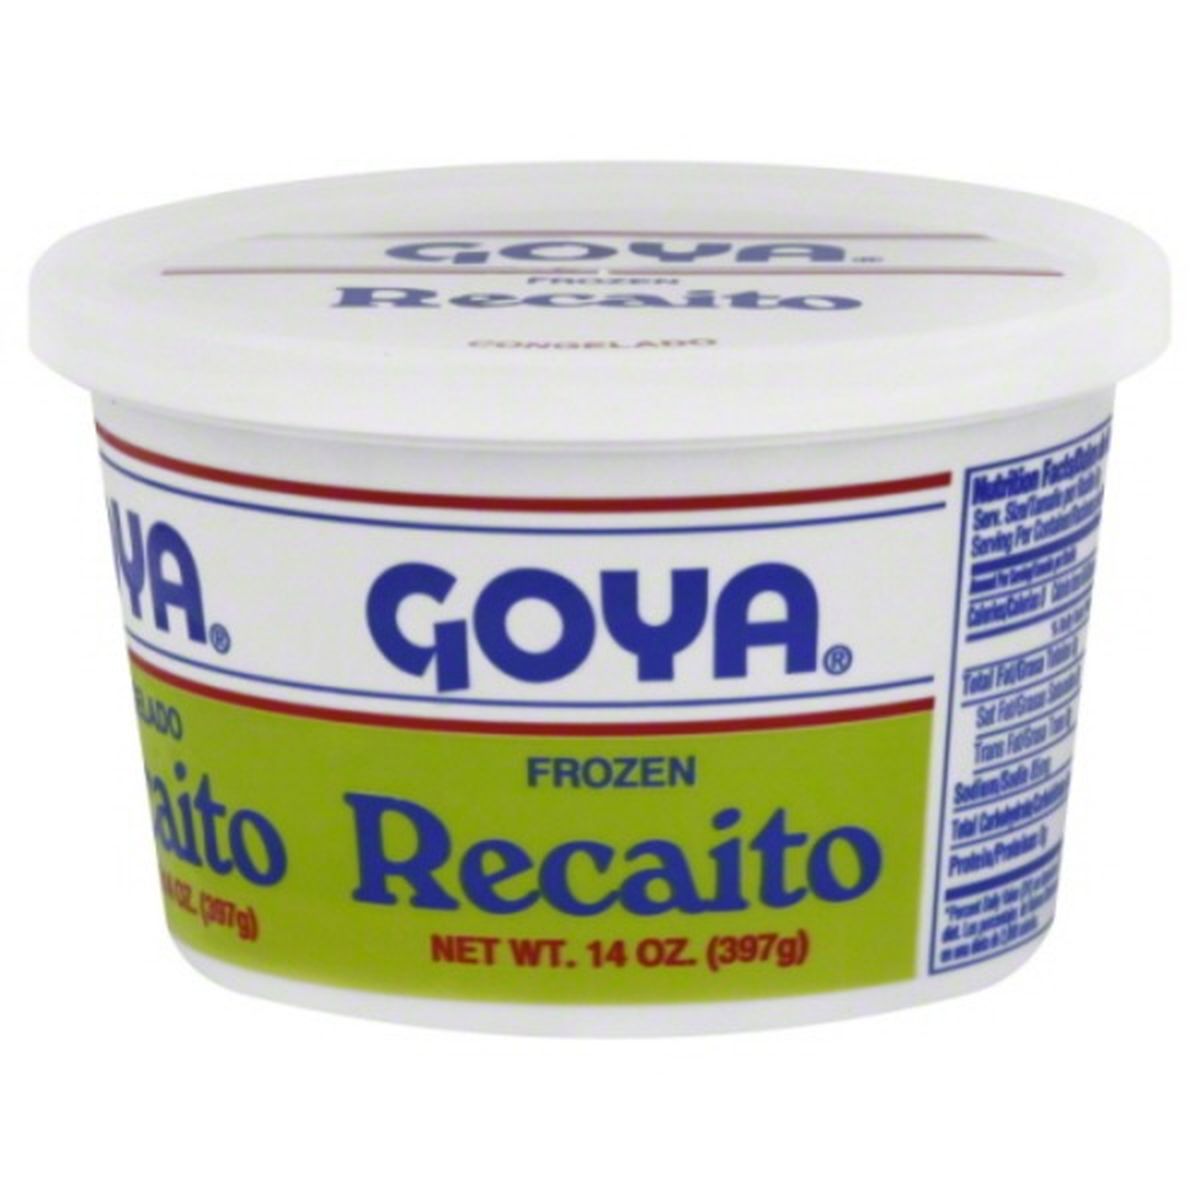 Calories in Goya Recaito, Frozen